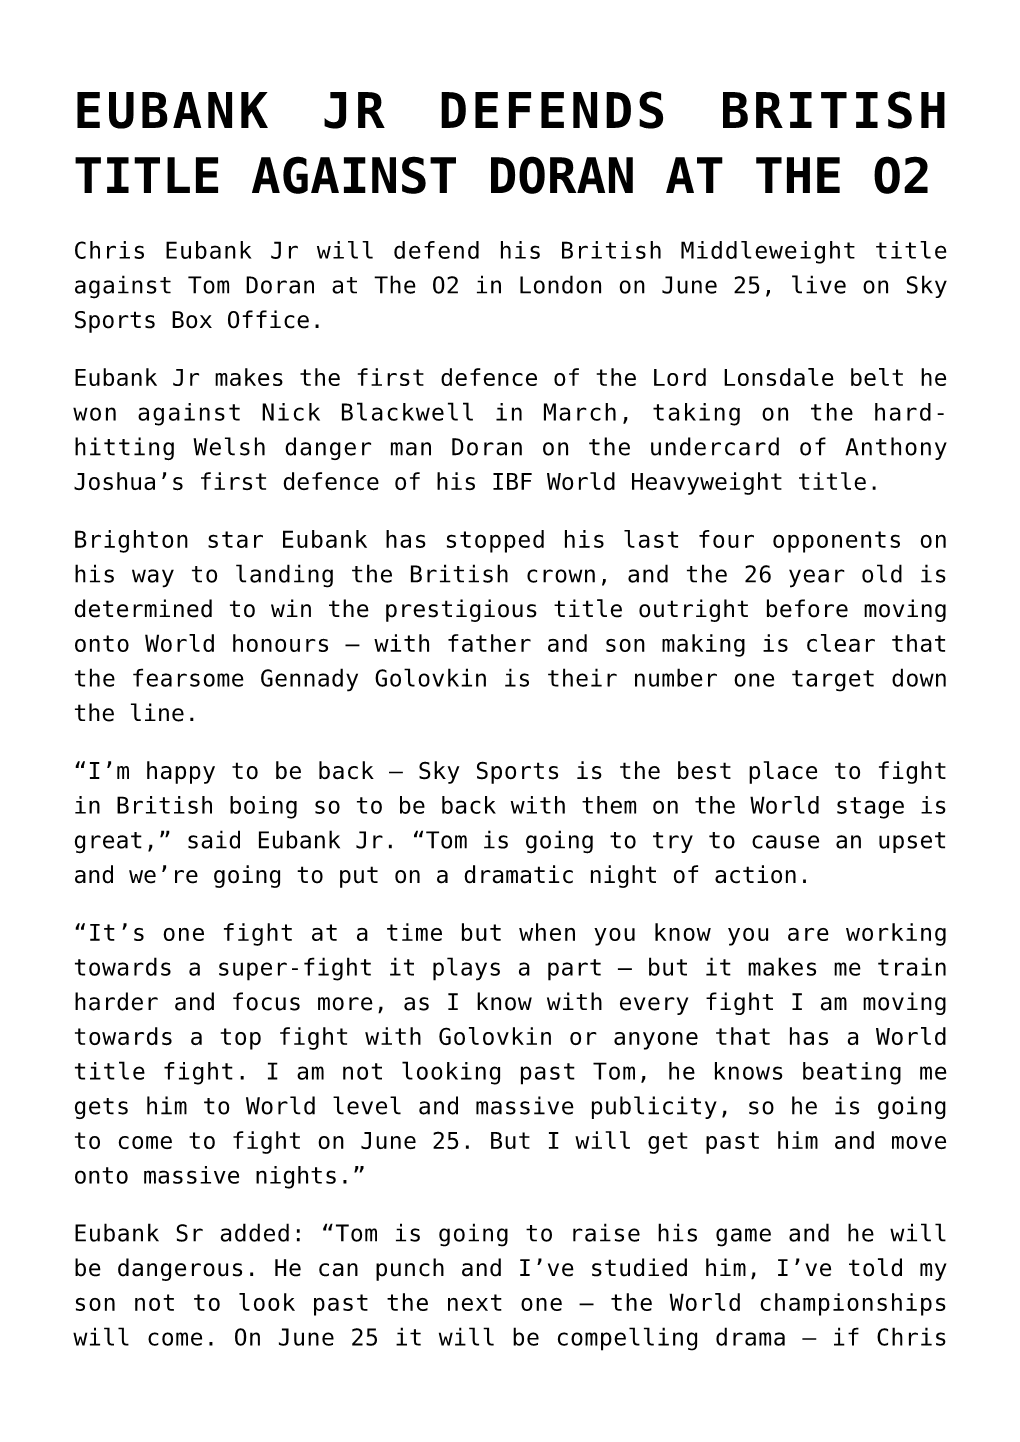 Eubank Jr Defends British Title Against Doran at the O2